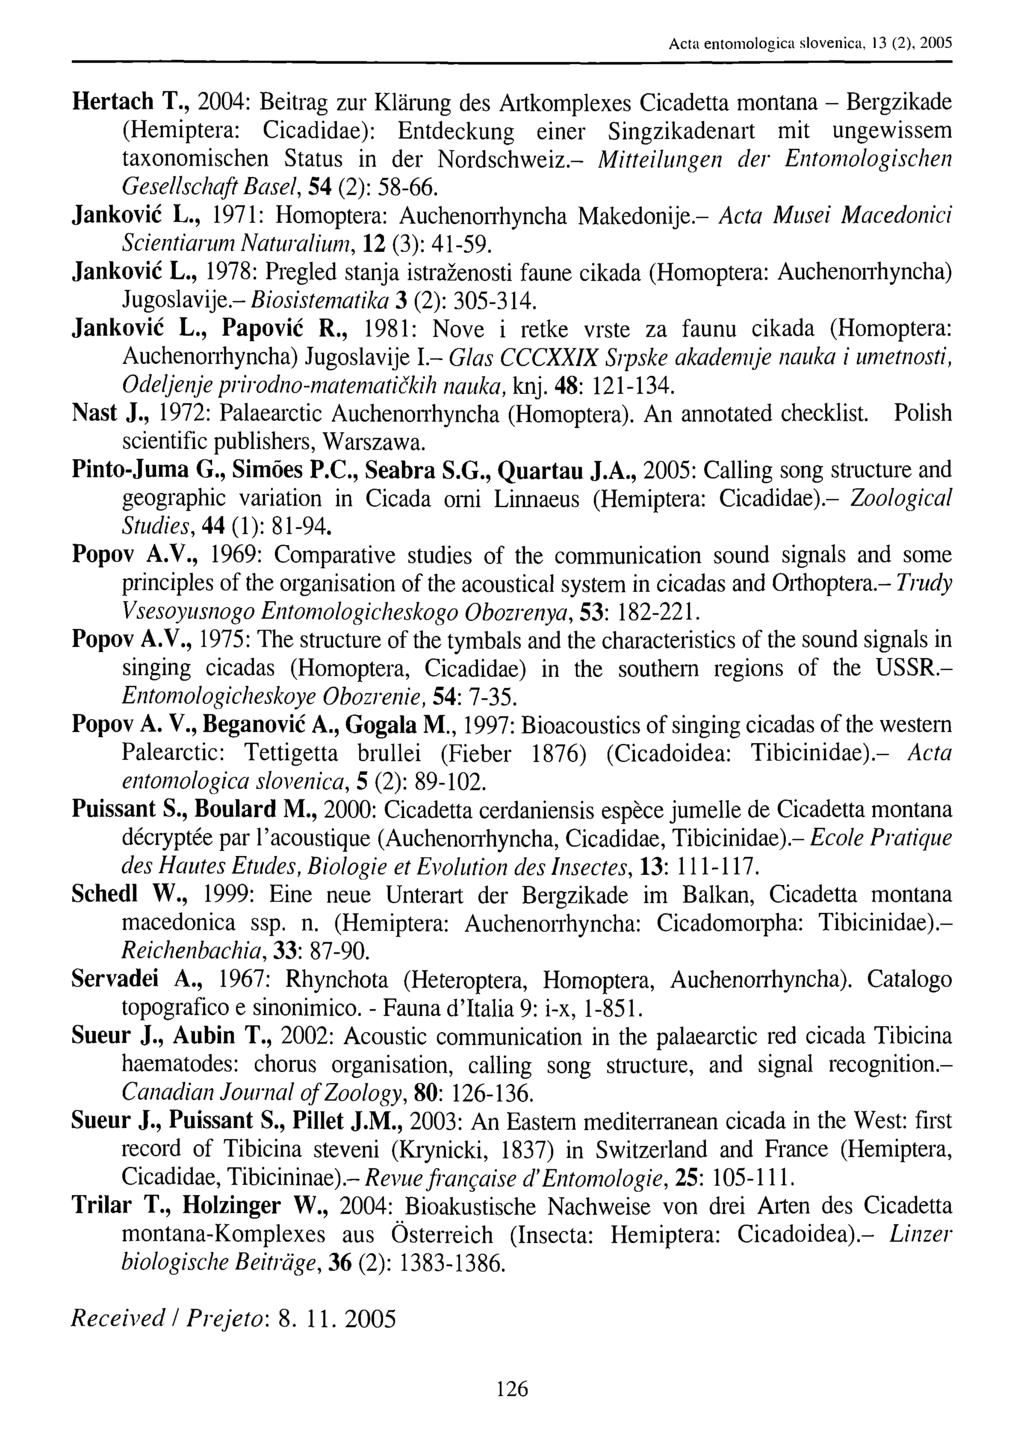 Slovenian Entomological Society, download unter www.biologiezentrum.at Acta entomologica slovenica, 13 (2), 2005 Hertach T.